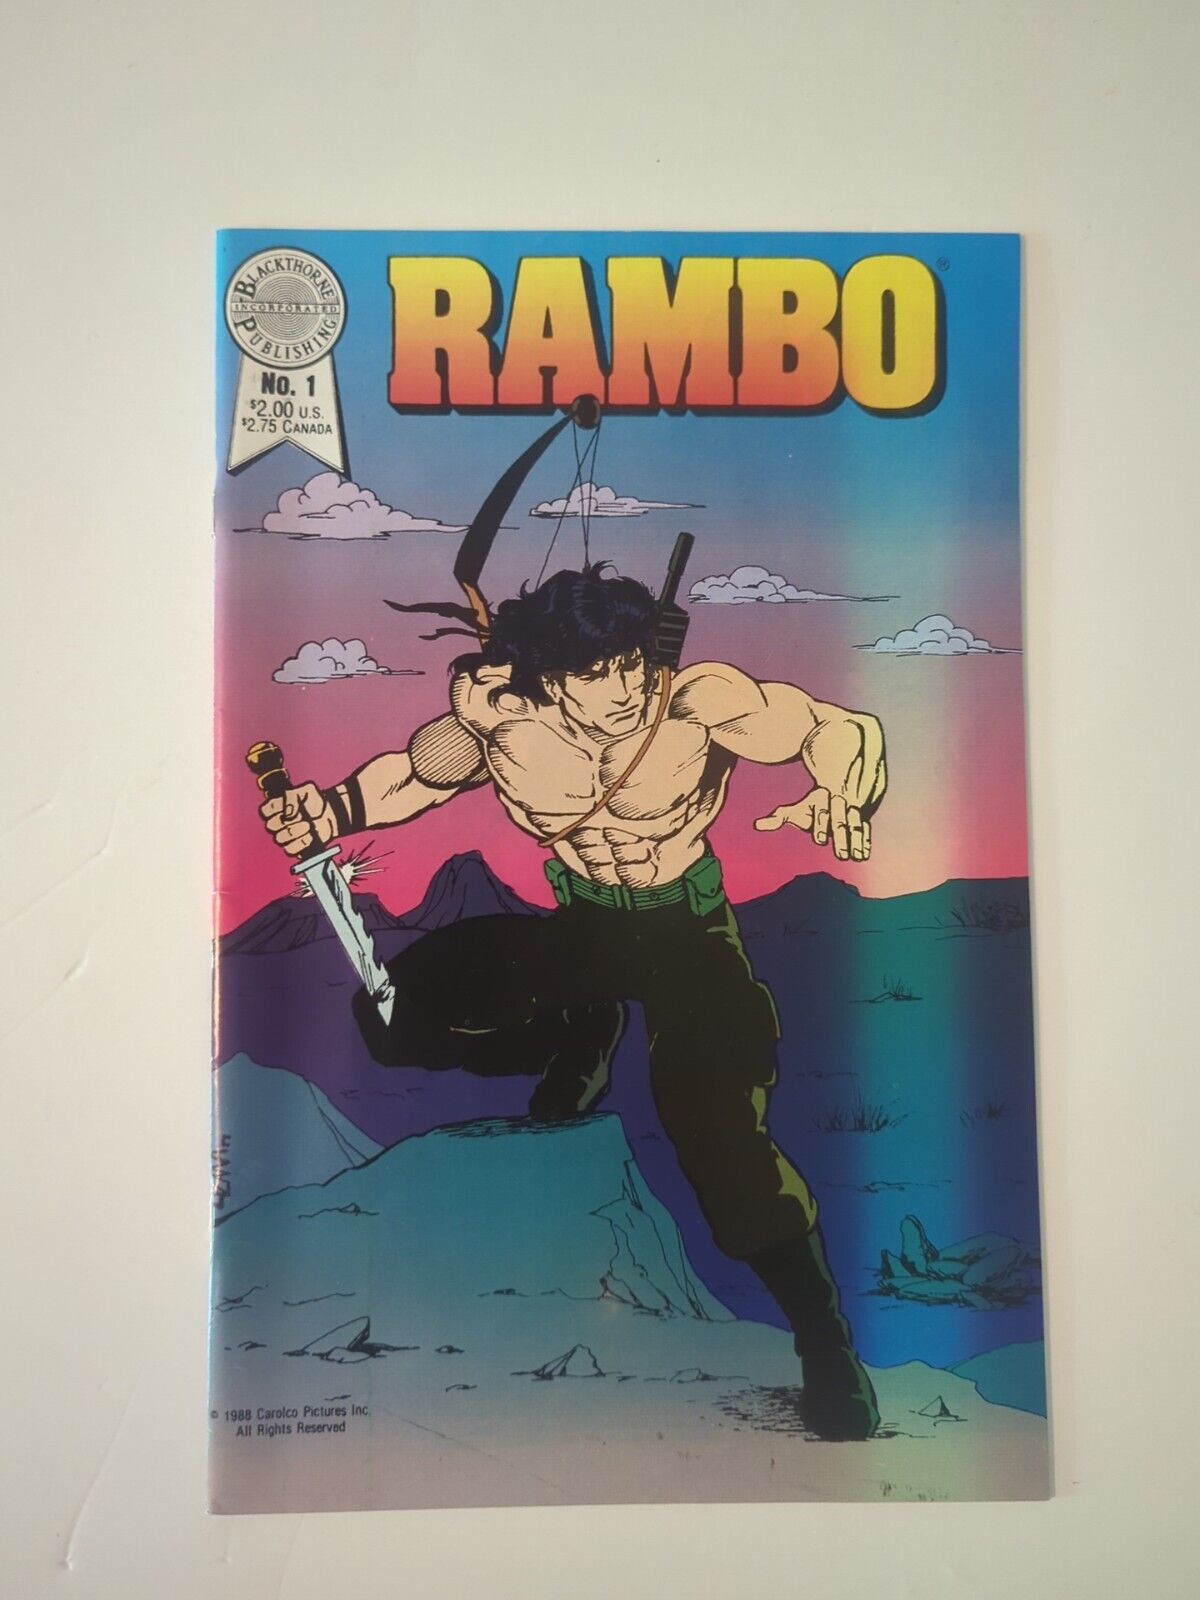 Rambo #1 (1988) - Rare Vintage Comic by Blackthorne Publishing